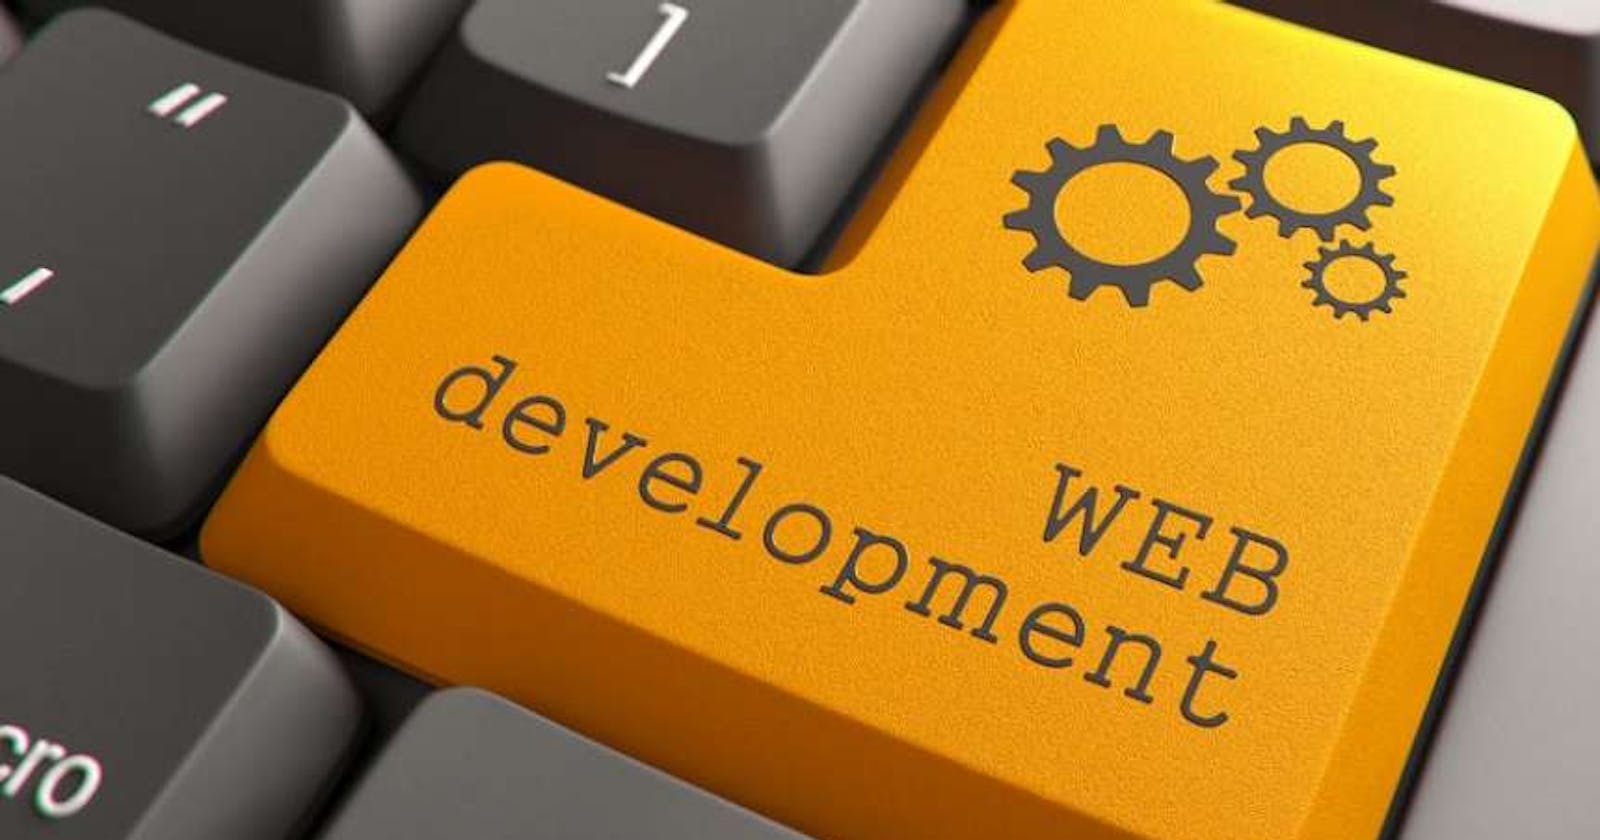 Starting with Web development?